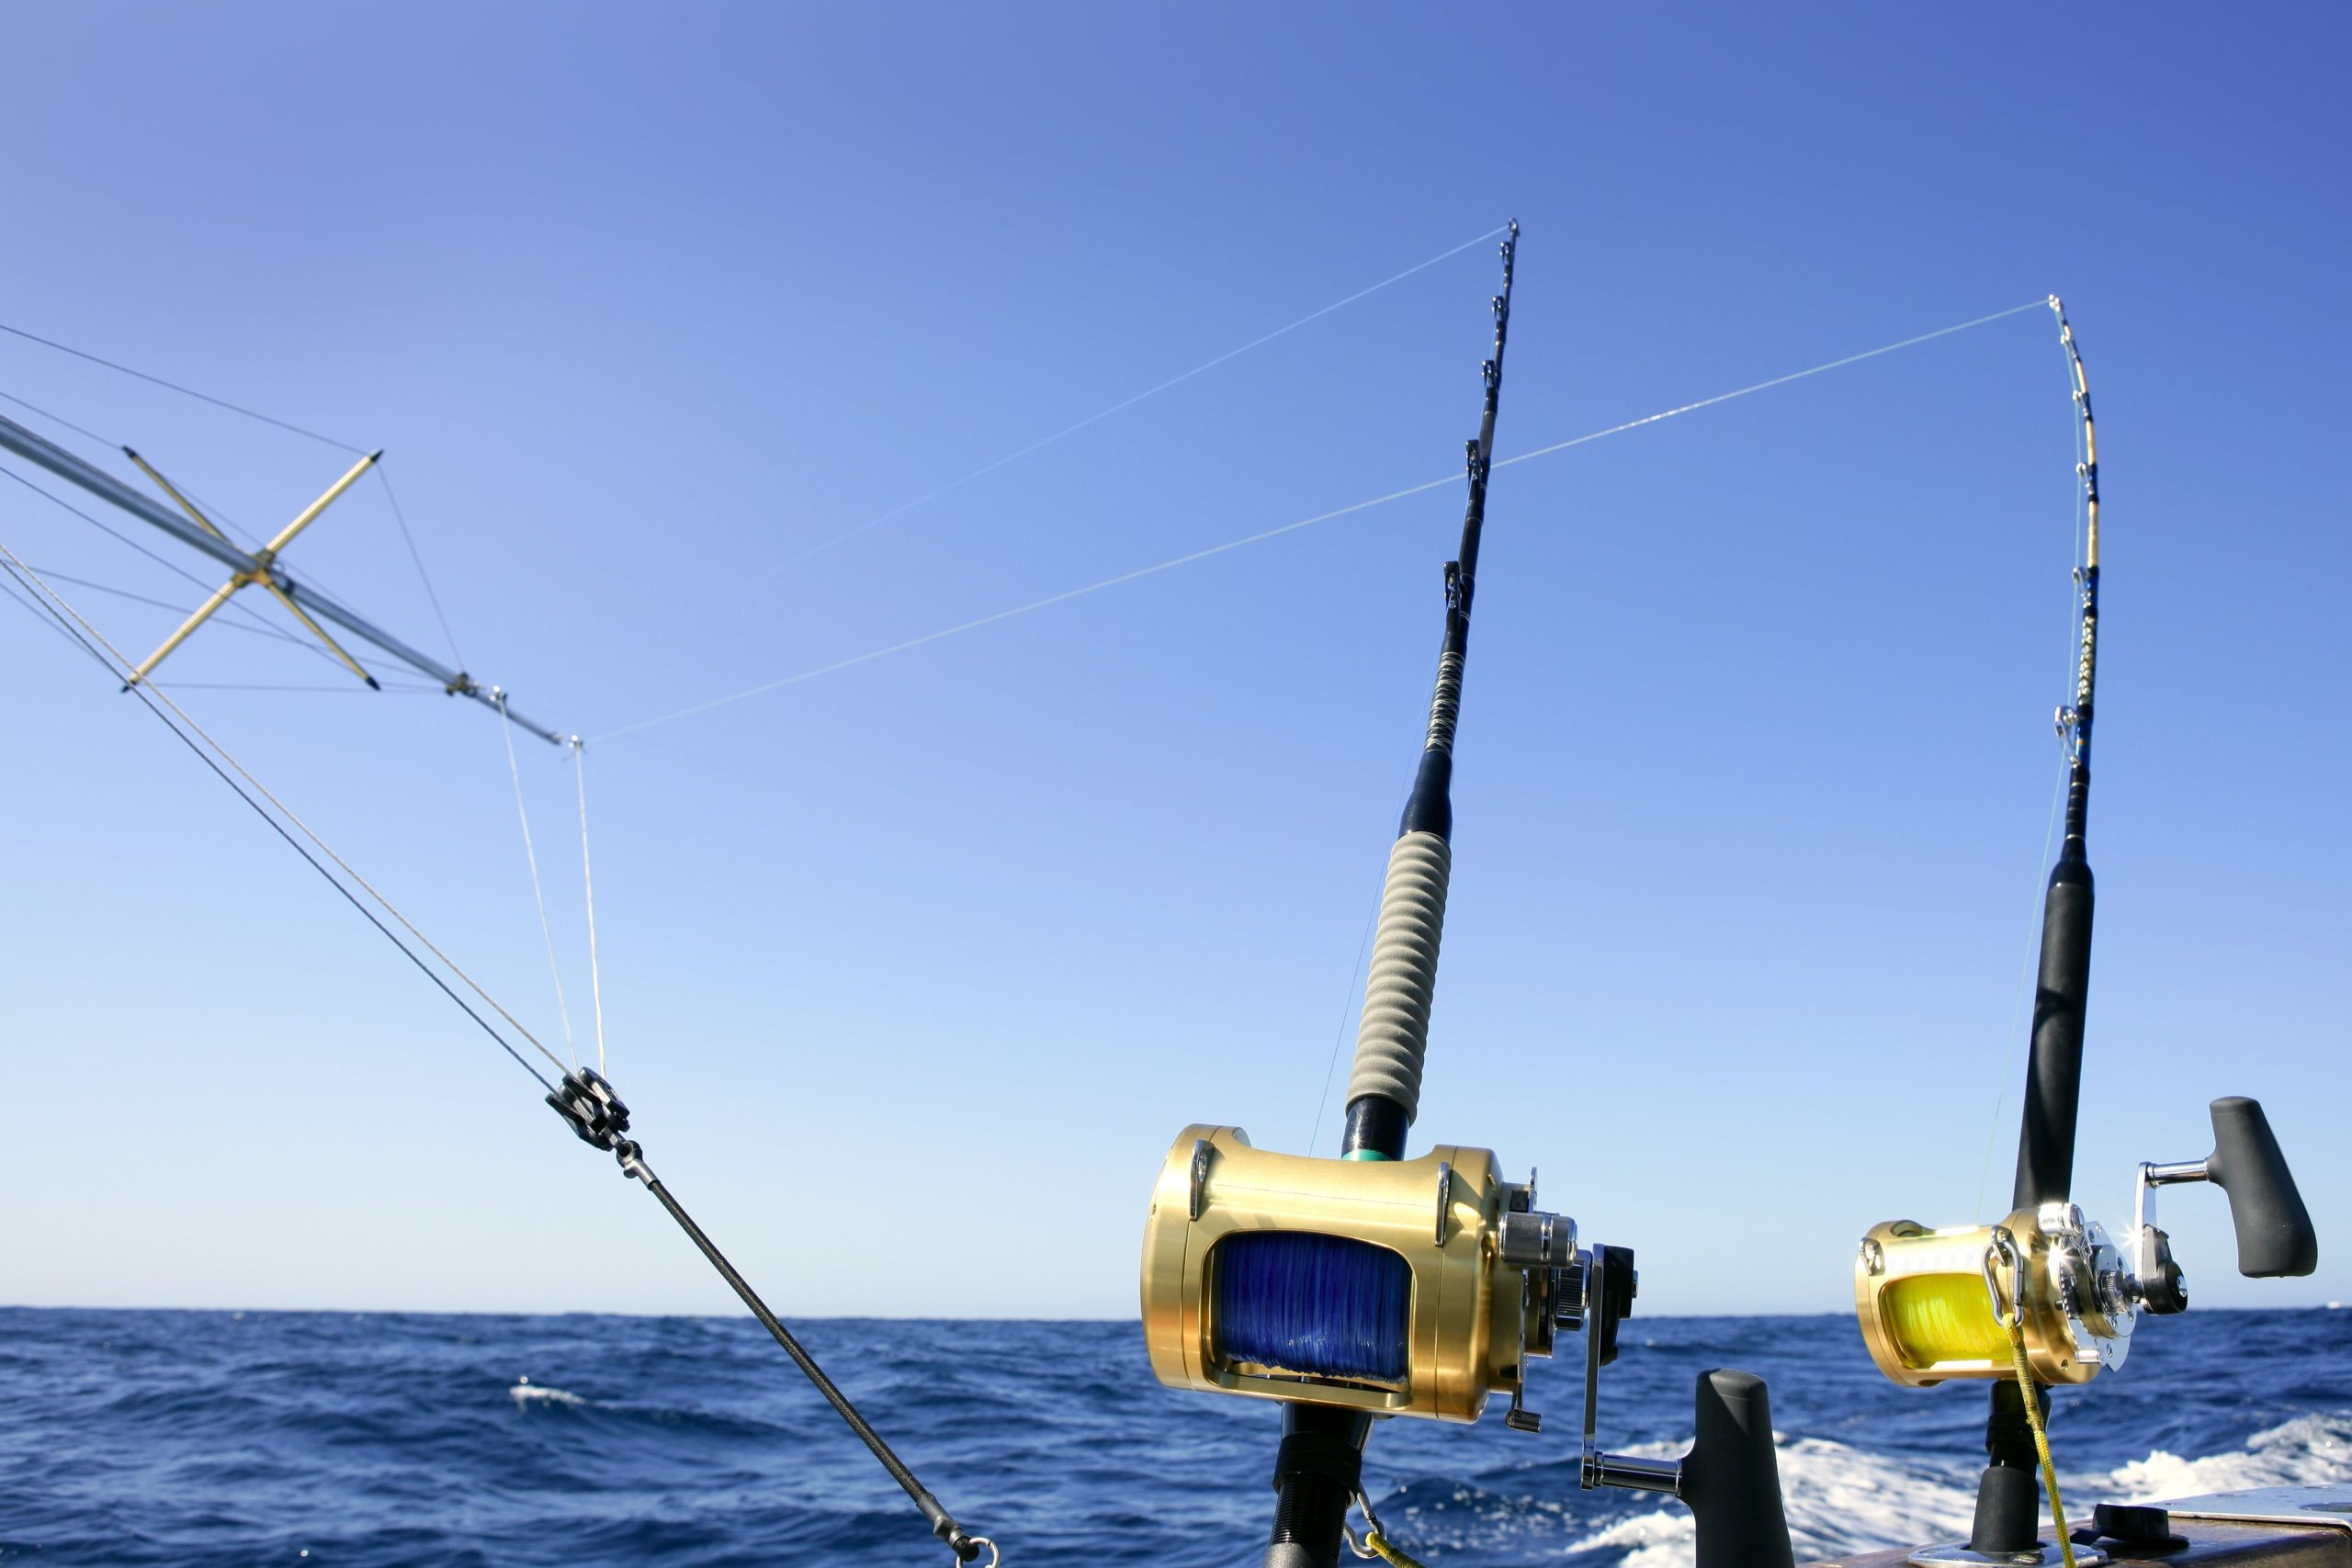 tuna fishing poles, tuna fishing poles Suppliers and Manufacturers at